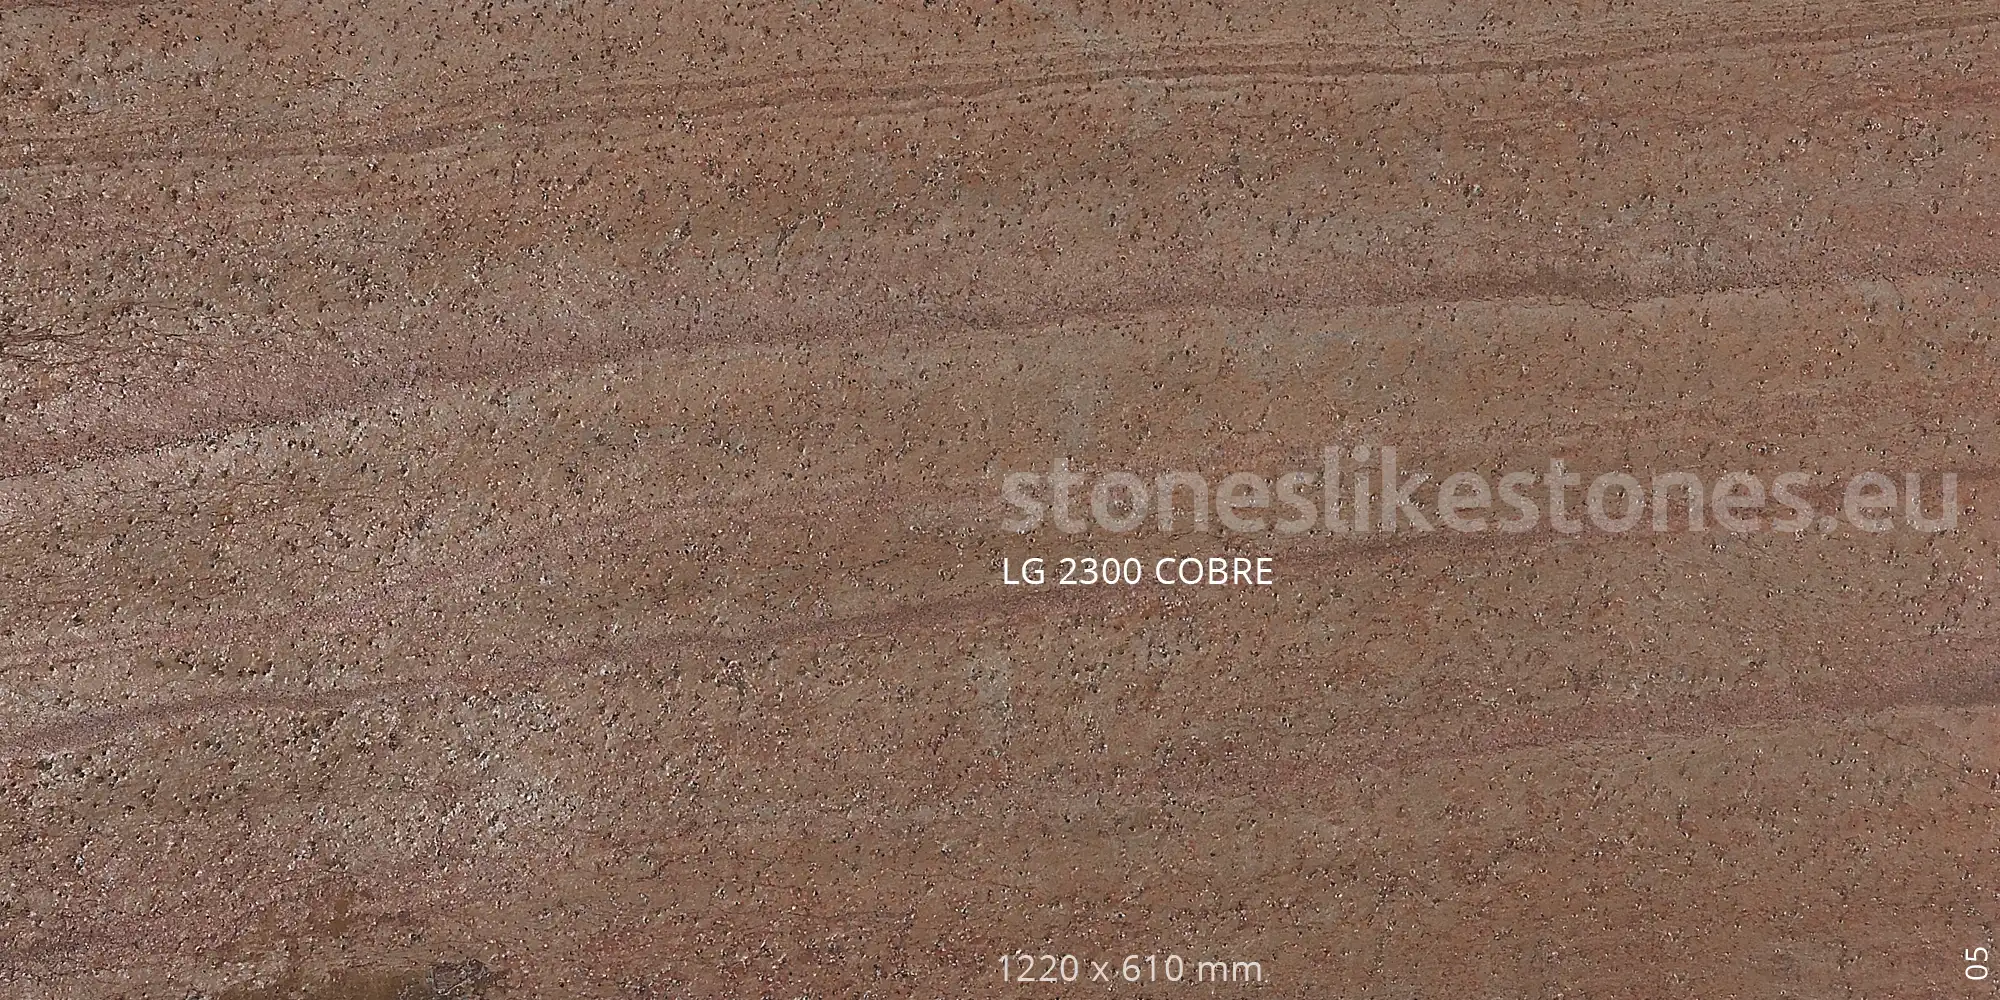 StoneslikeStones Dünnschiefer LG 2300 COBRE Glimmerschiefer – Download mit Rechtsklick